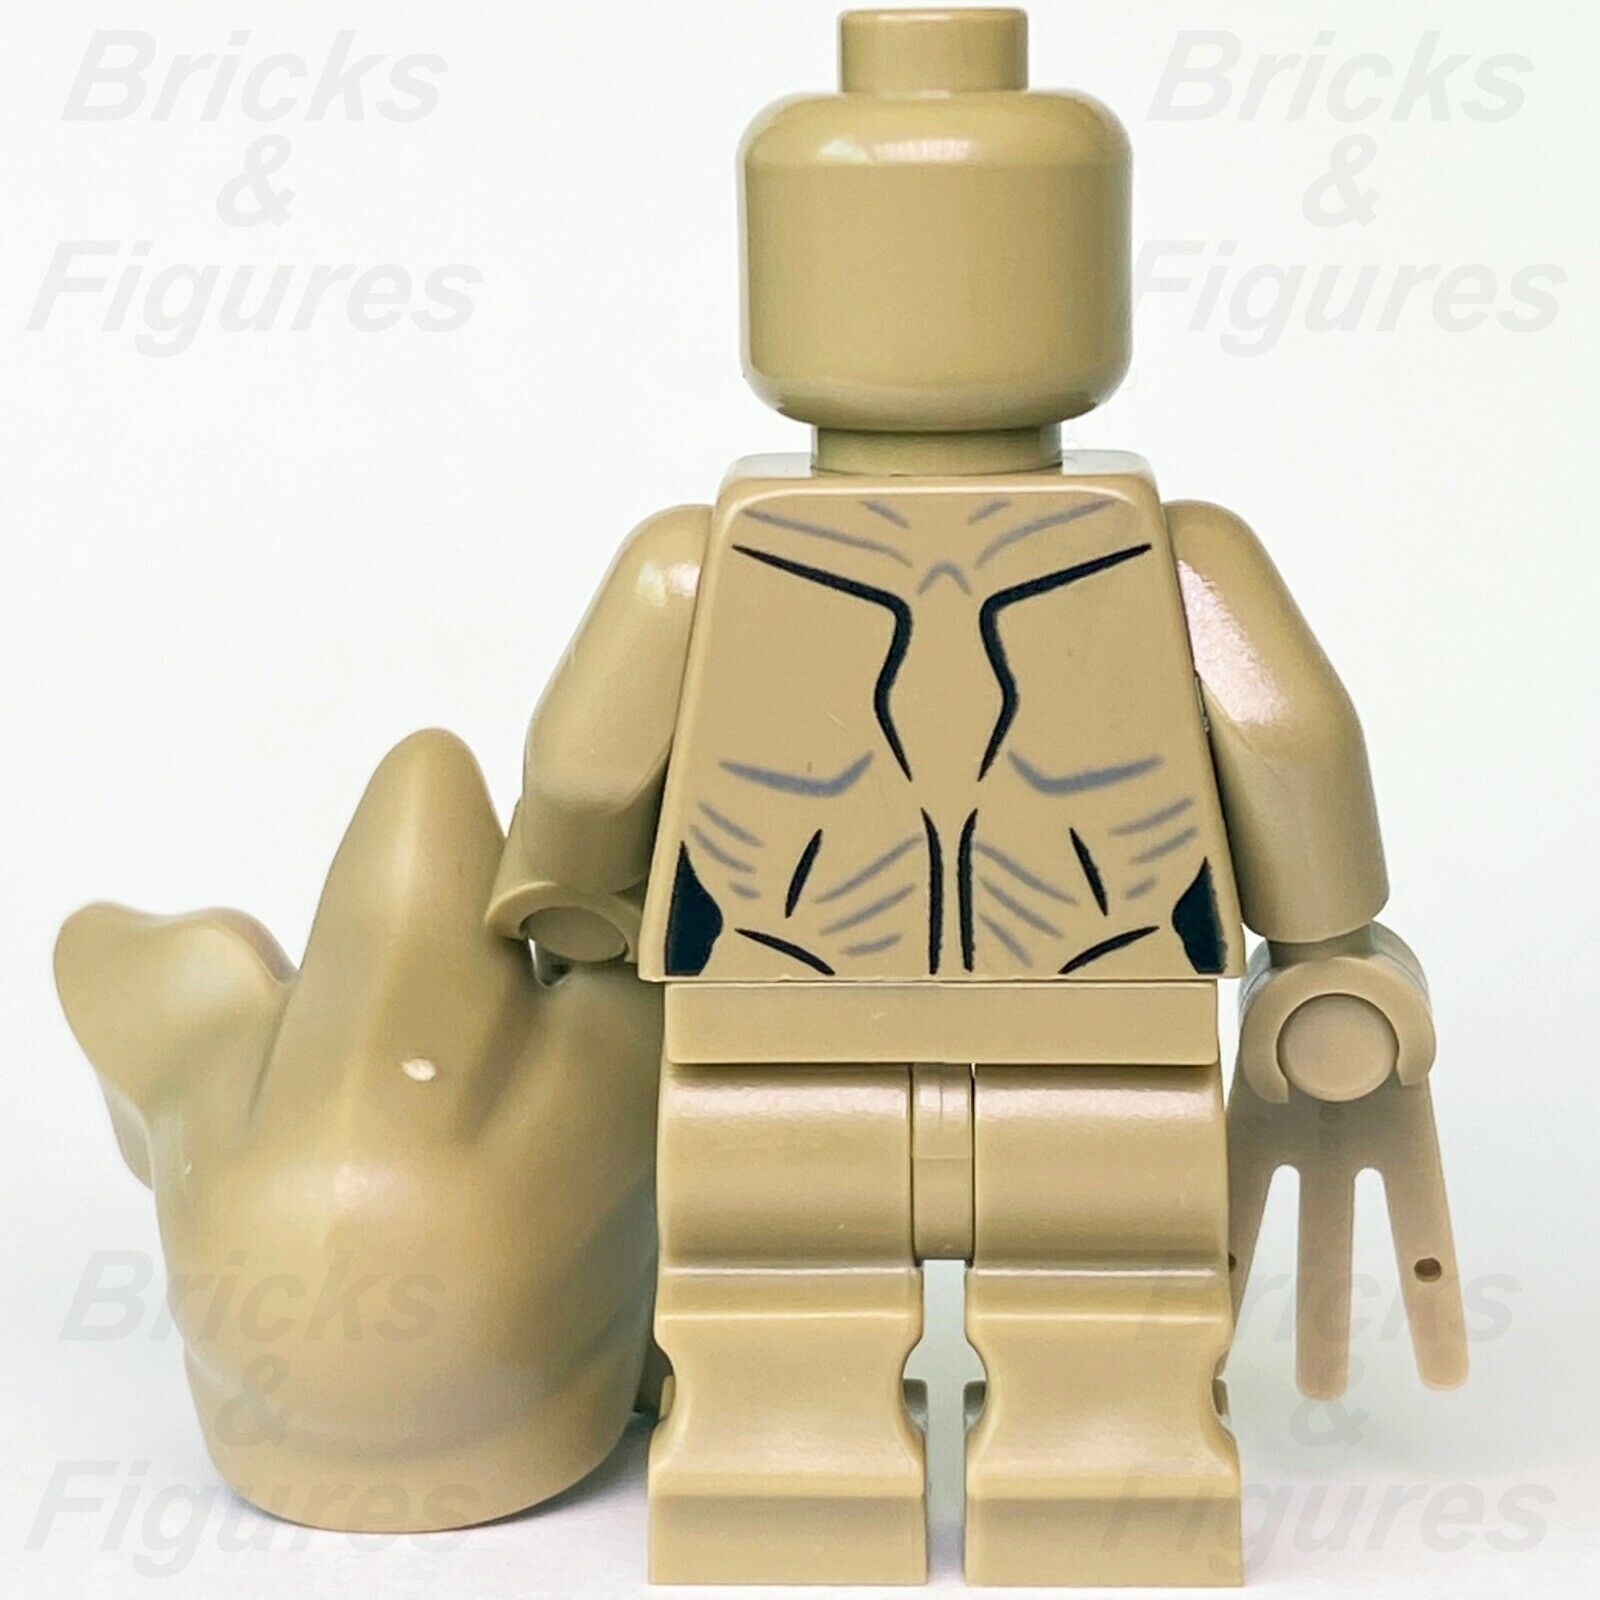 New Stranger Things LEGO Demogorgon Netflix TV Series Minifigure from set 75810 - Bricks & Figures